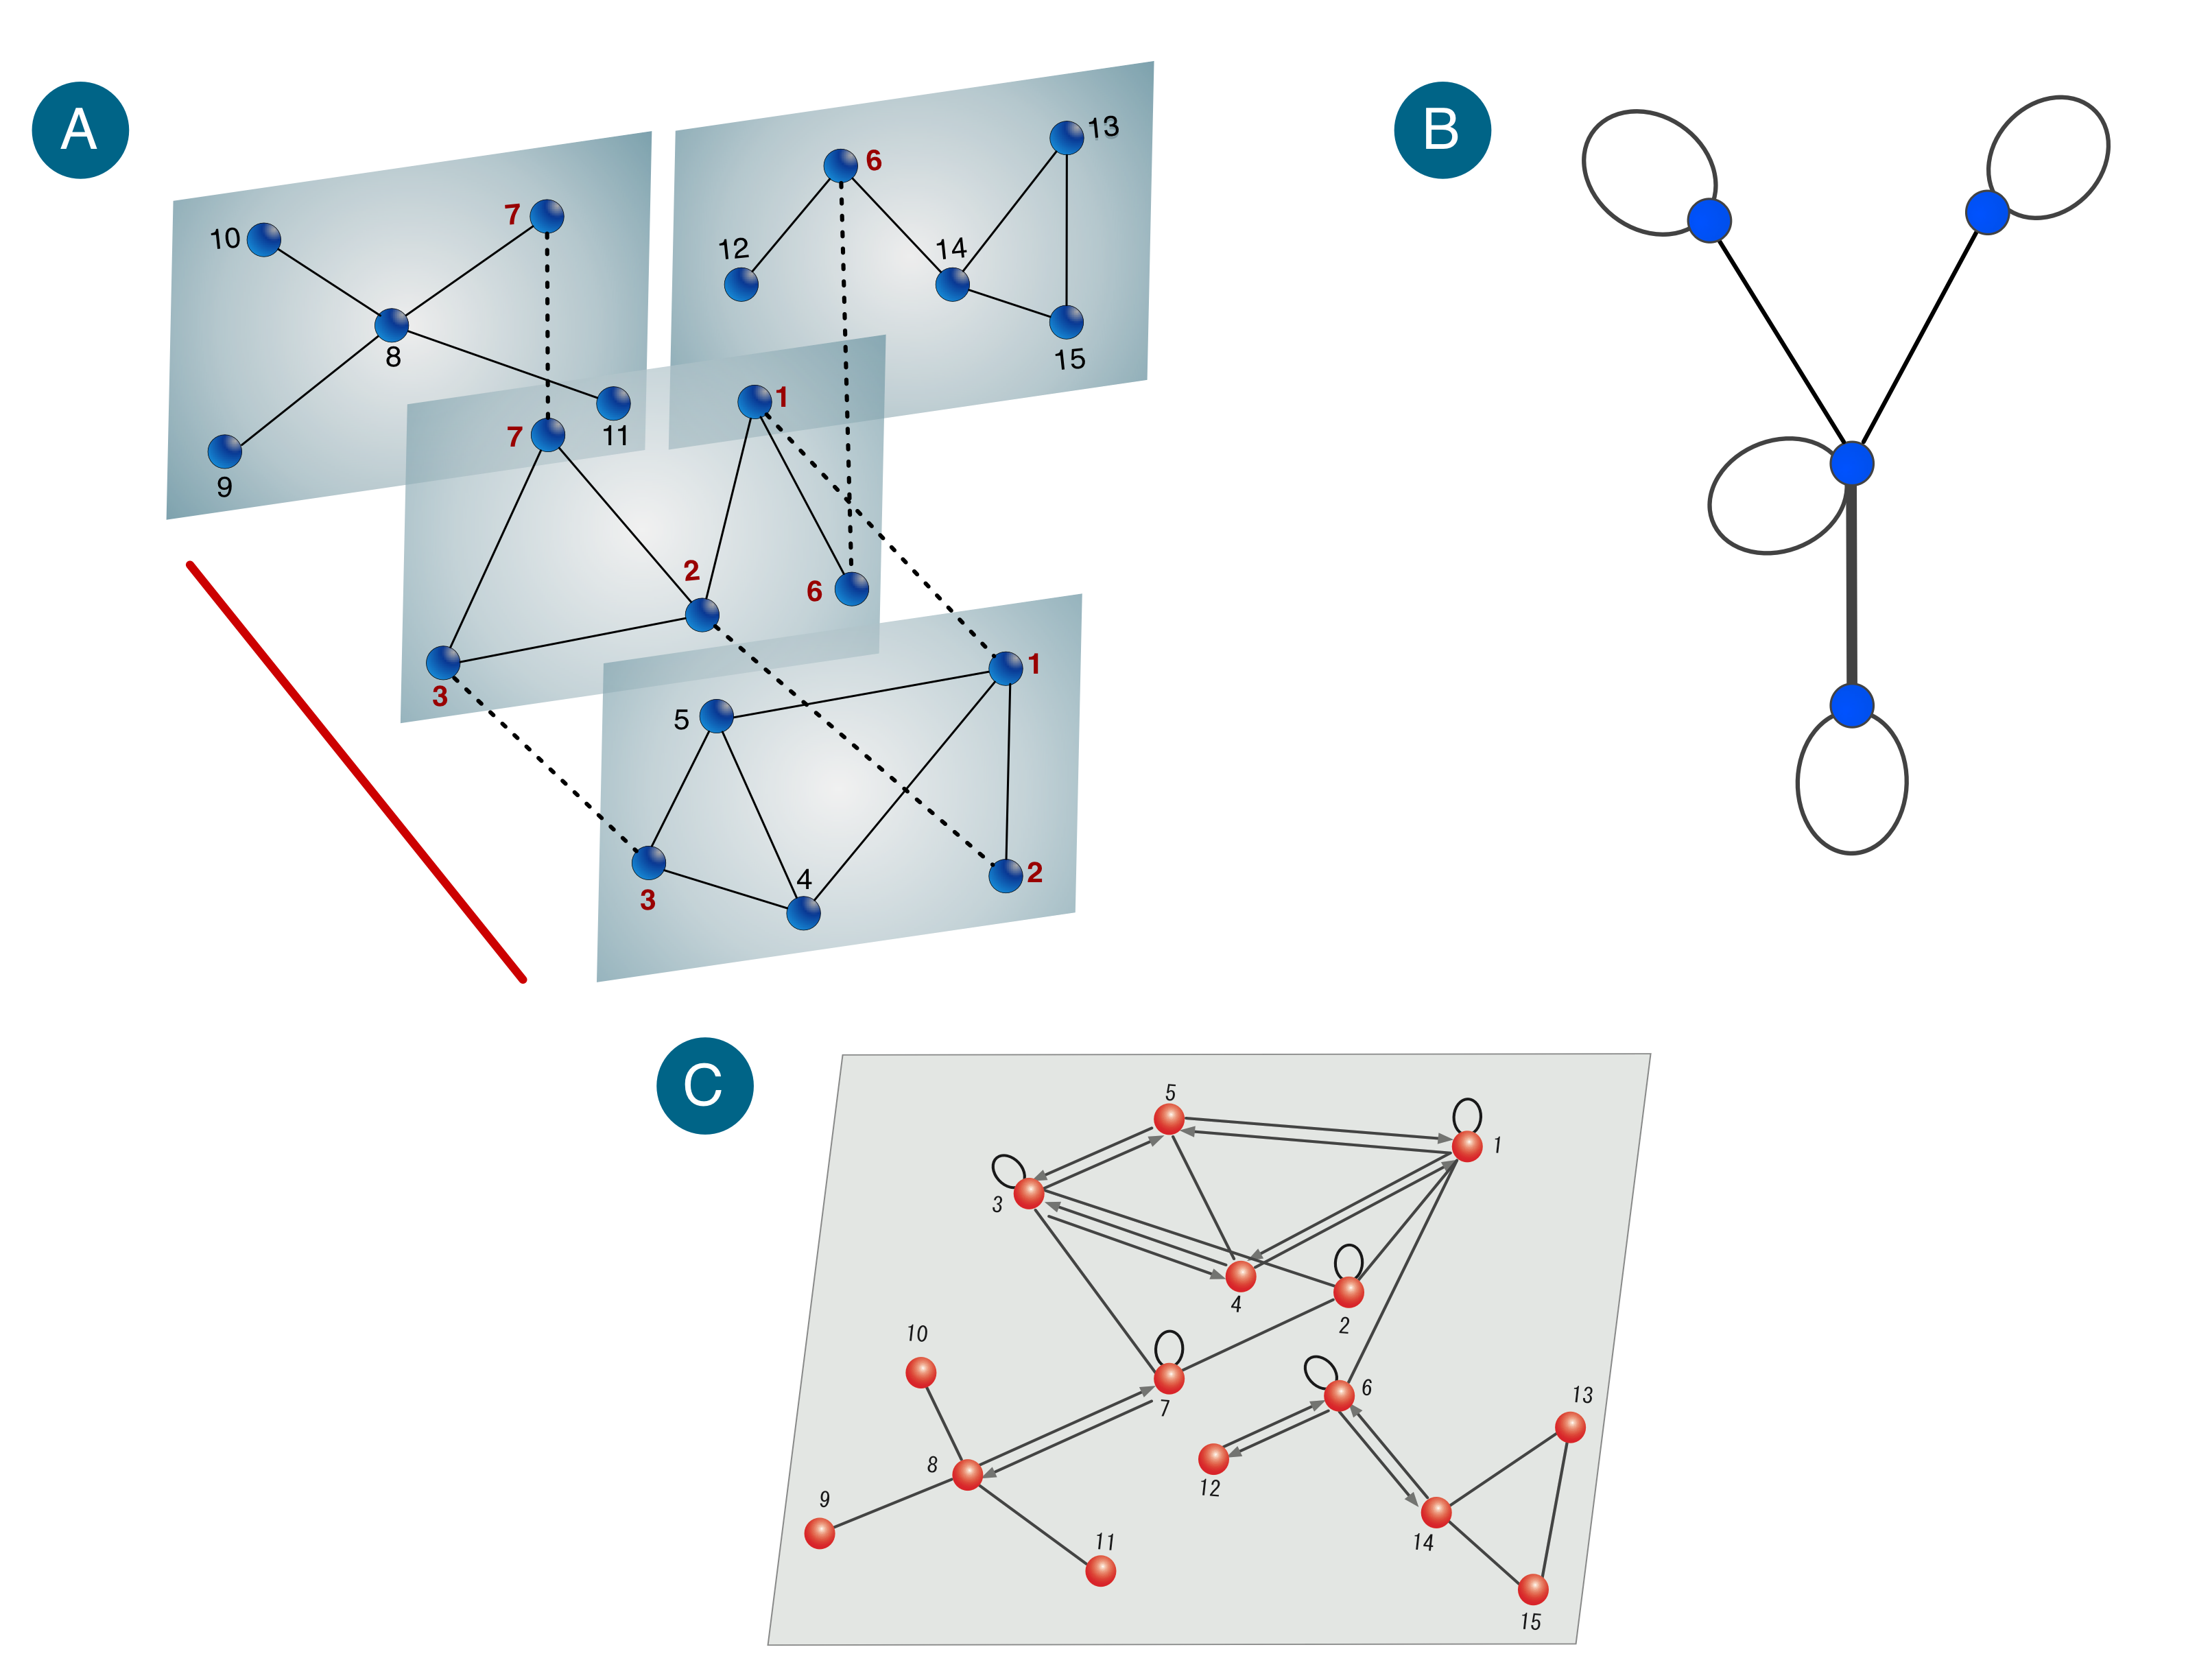 Multiplex networks